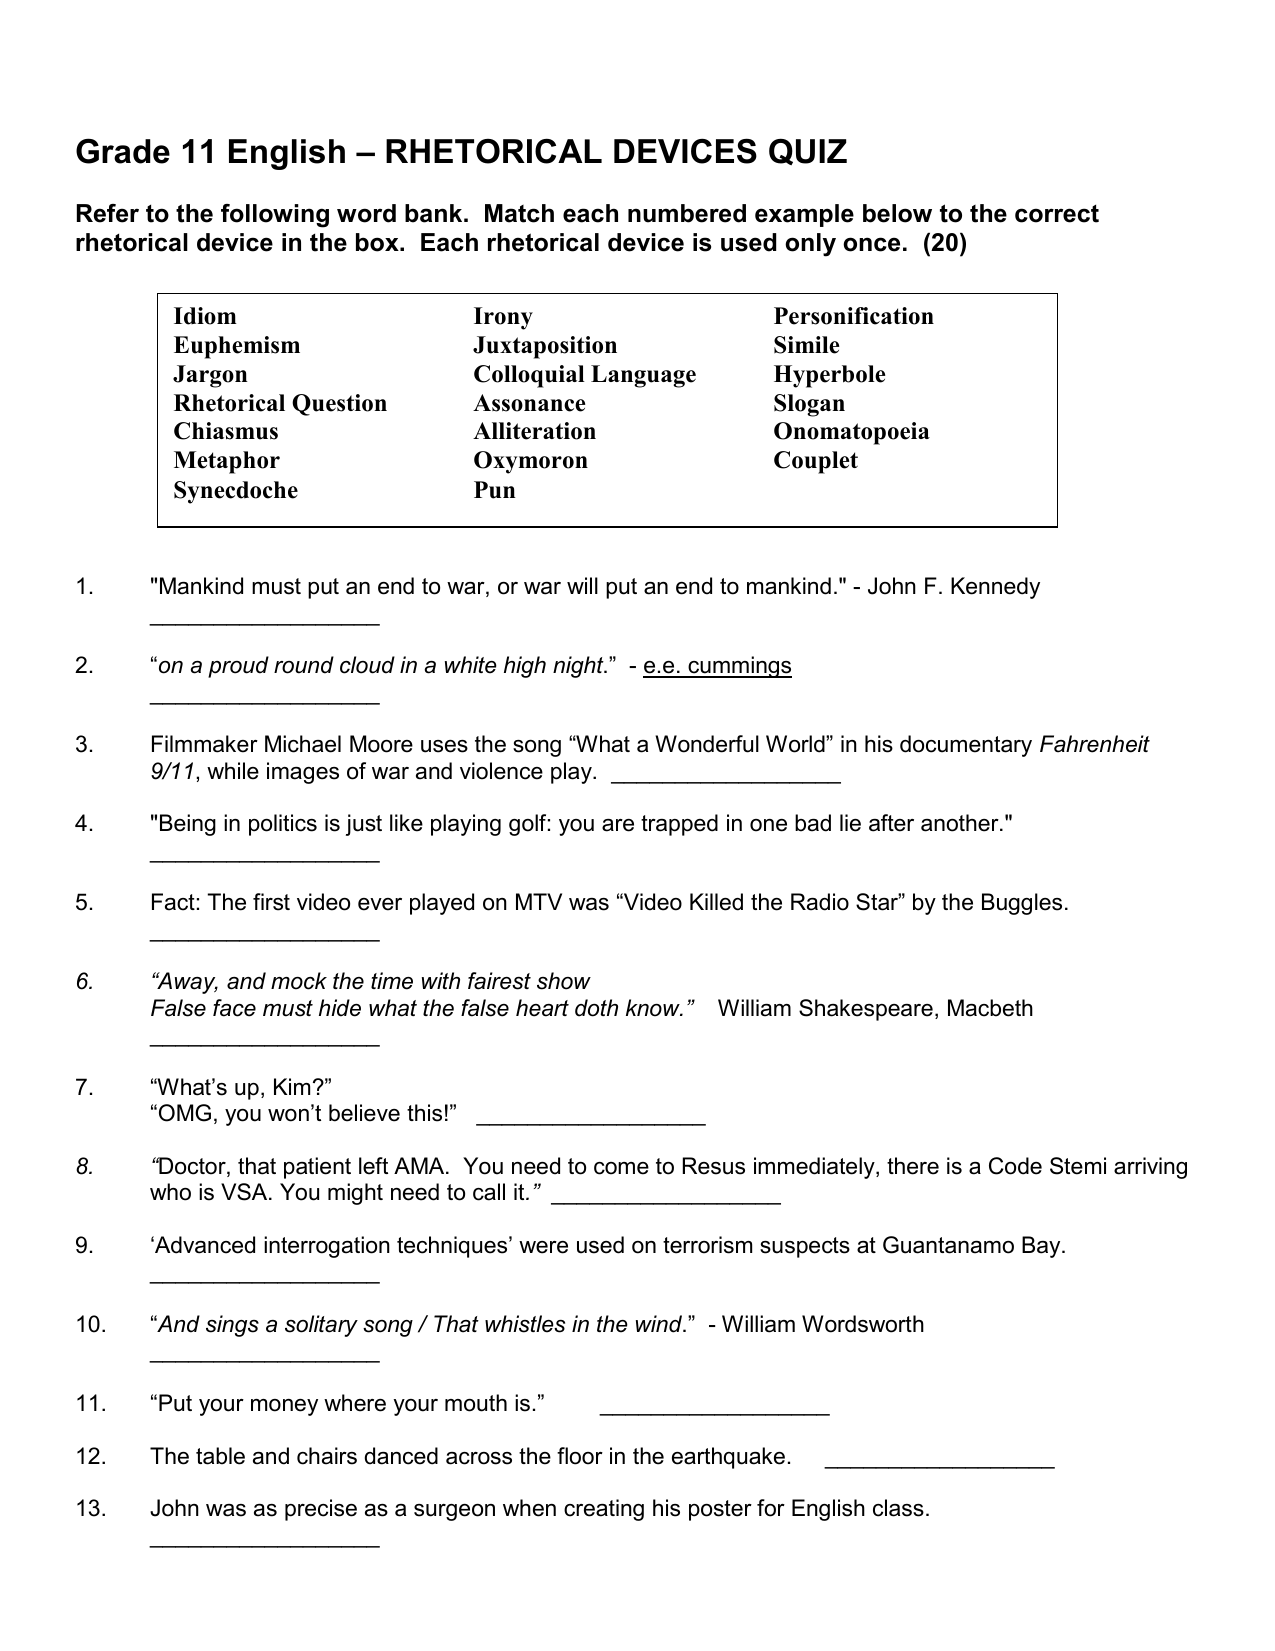 Grade 11 English Rhetorical Devices Quiz